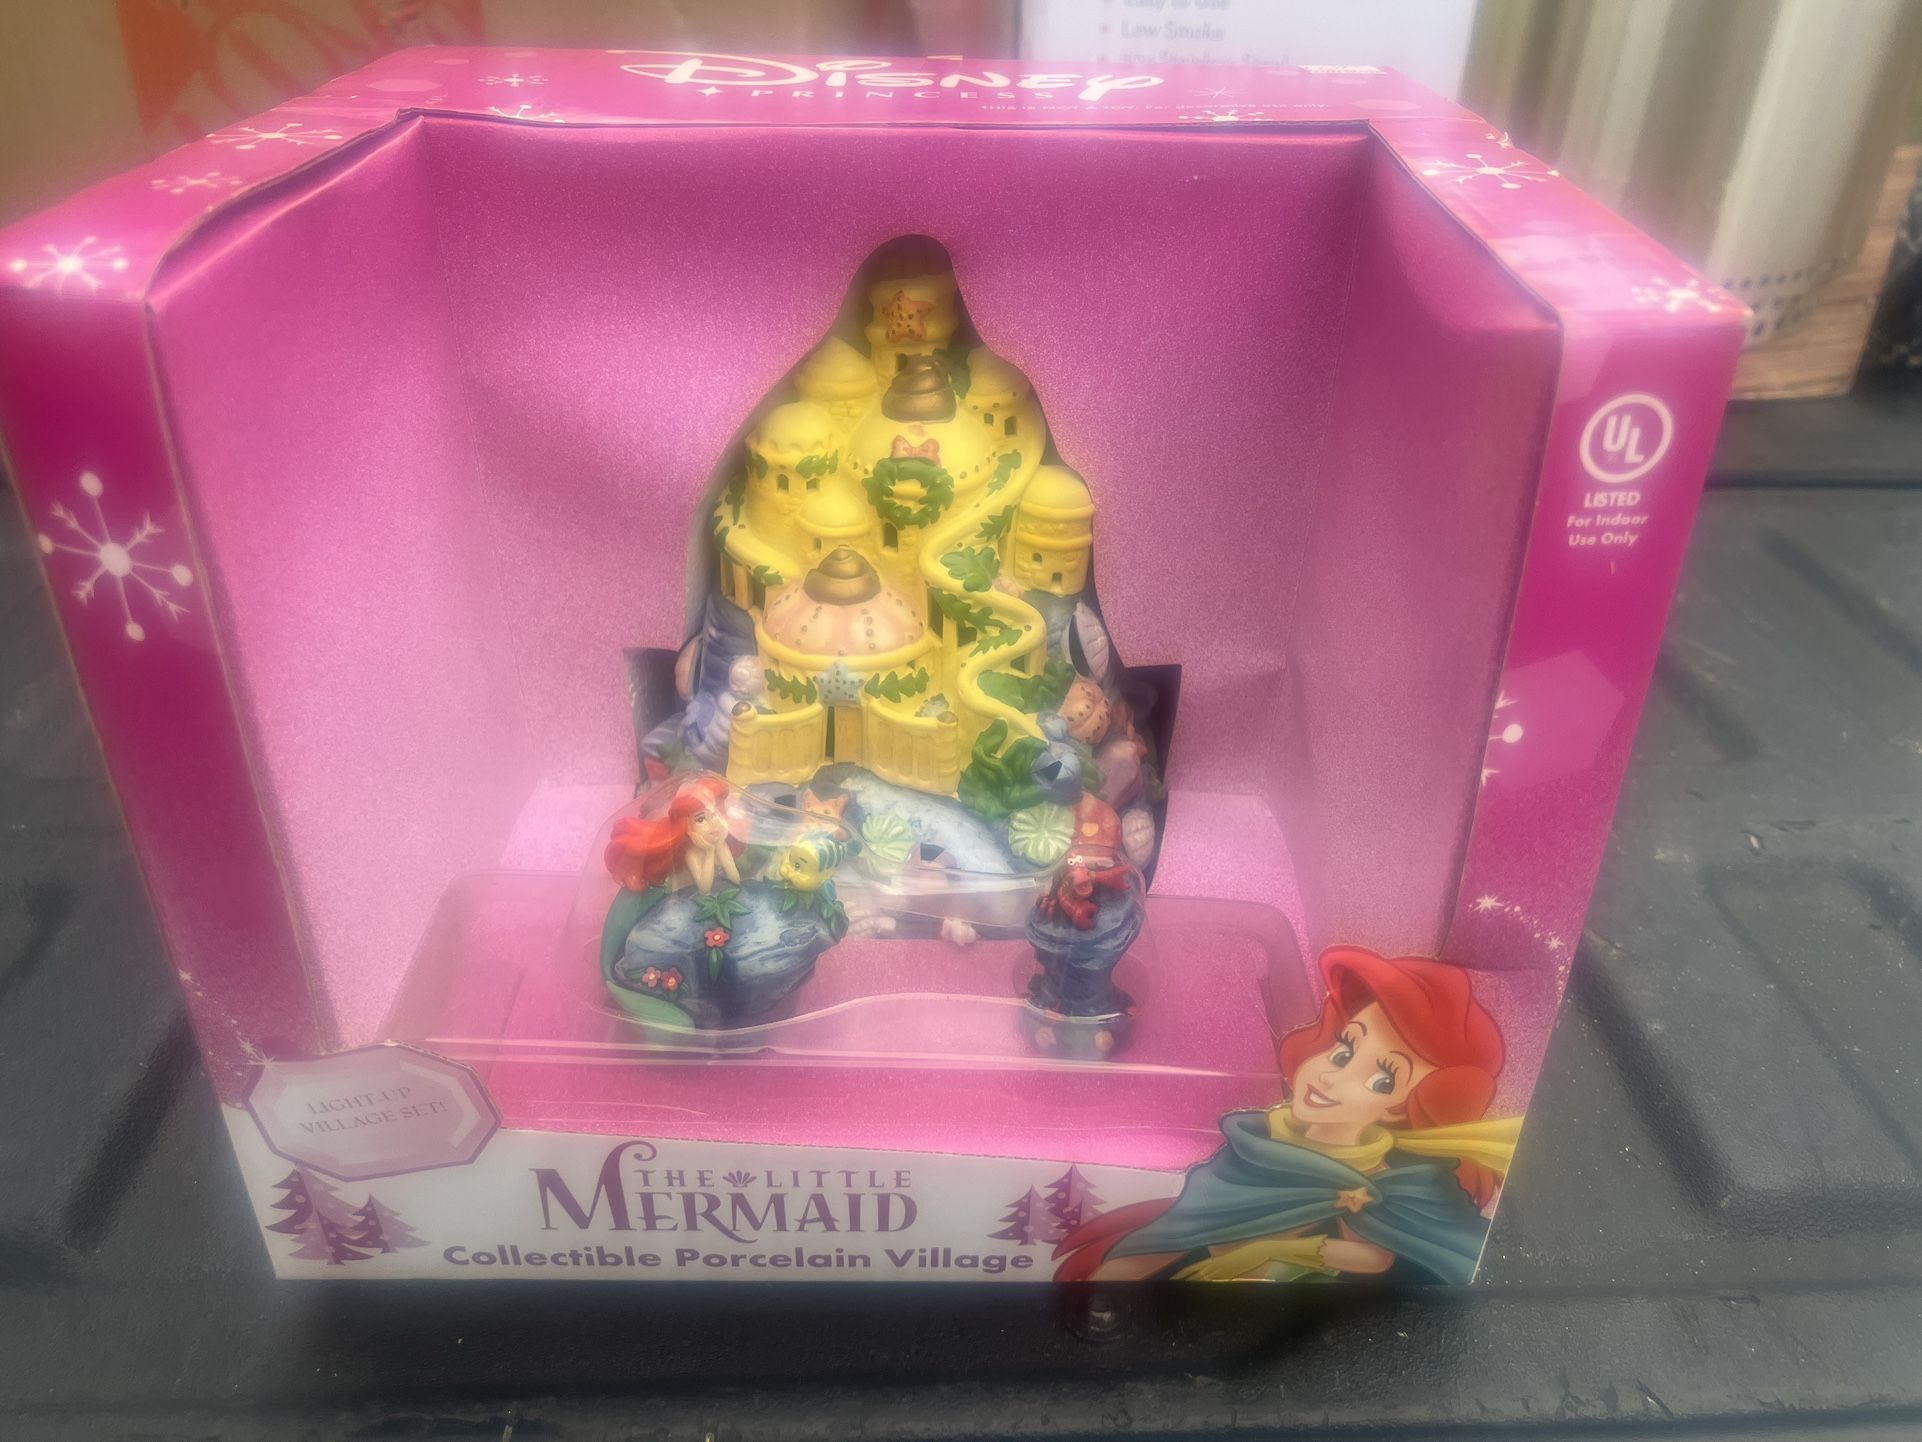 Disney Princess Little Mermaid Light Up Village Set Porcelain New in Box NIB